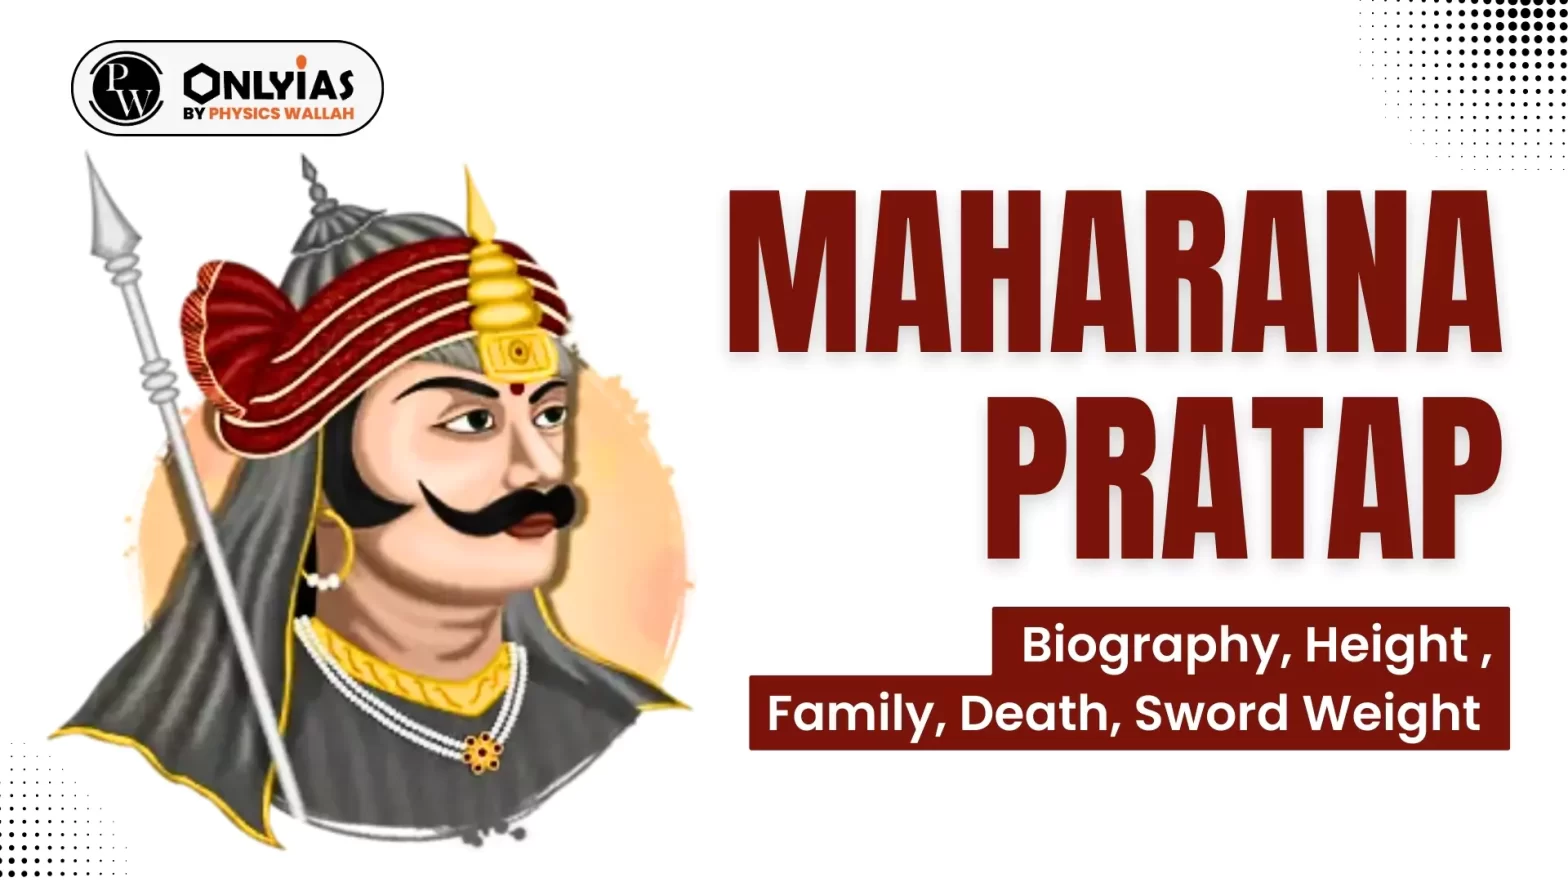 Maharana Pratap Biography, Height, Family, Death, Sword Weight